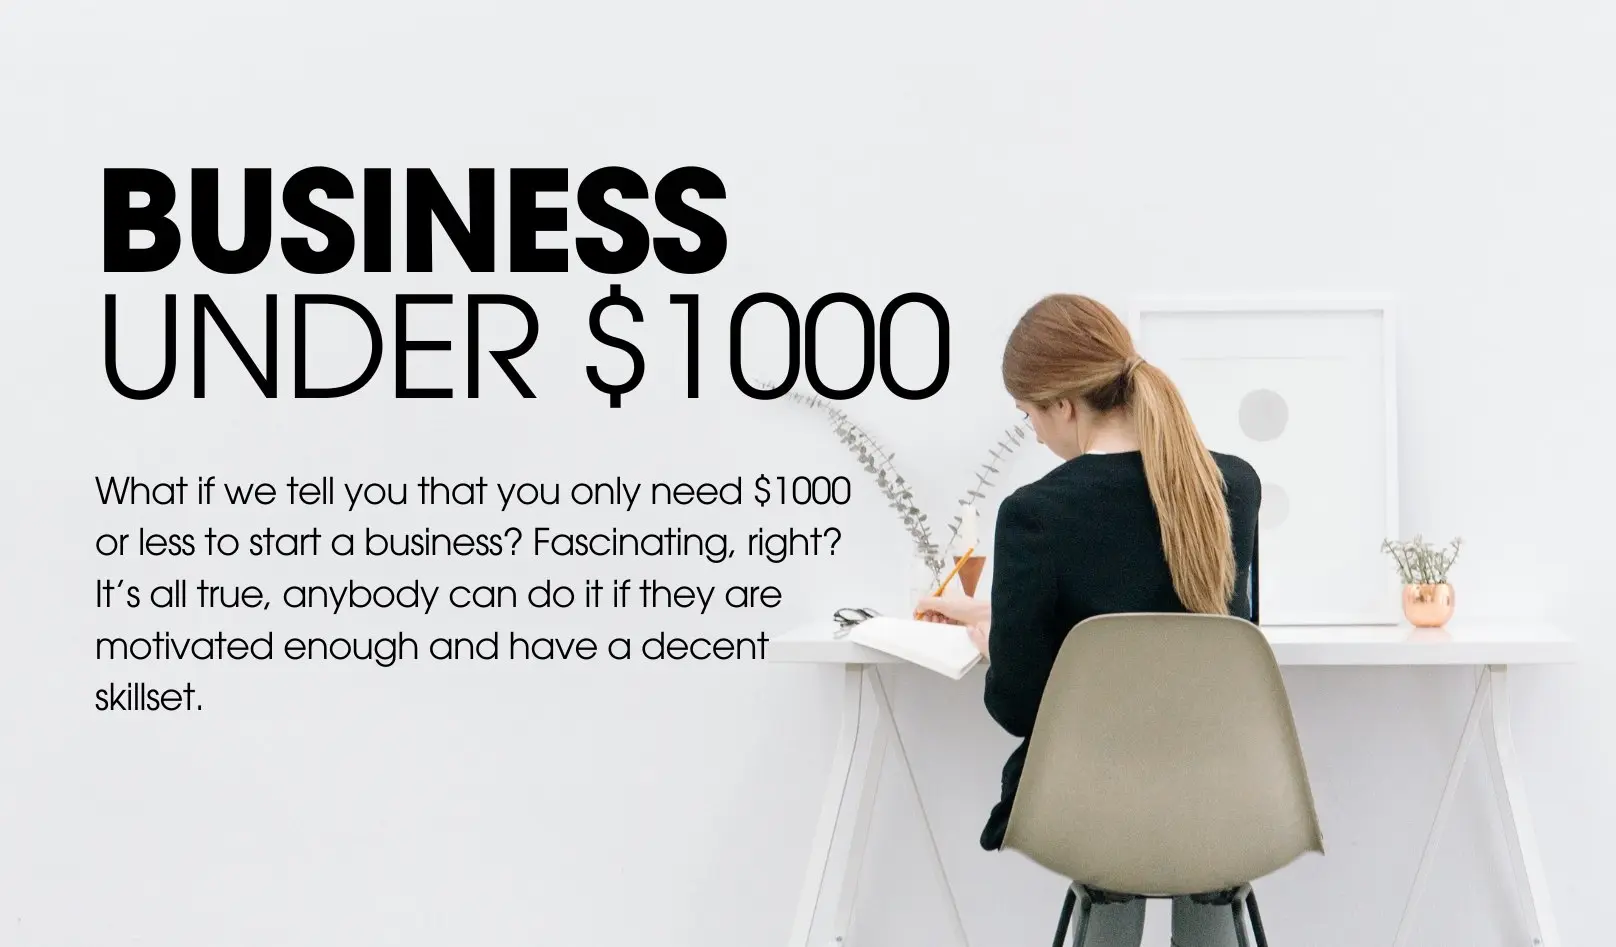 Businesses under $1000